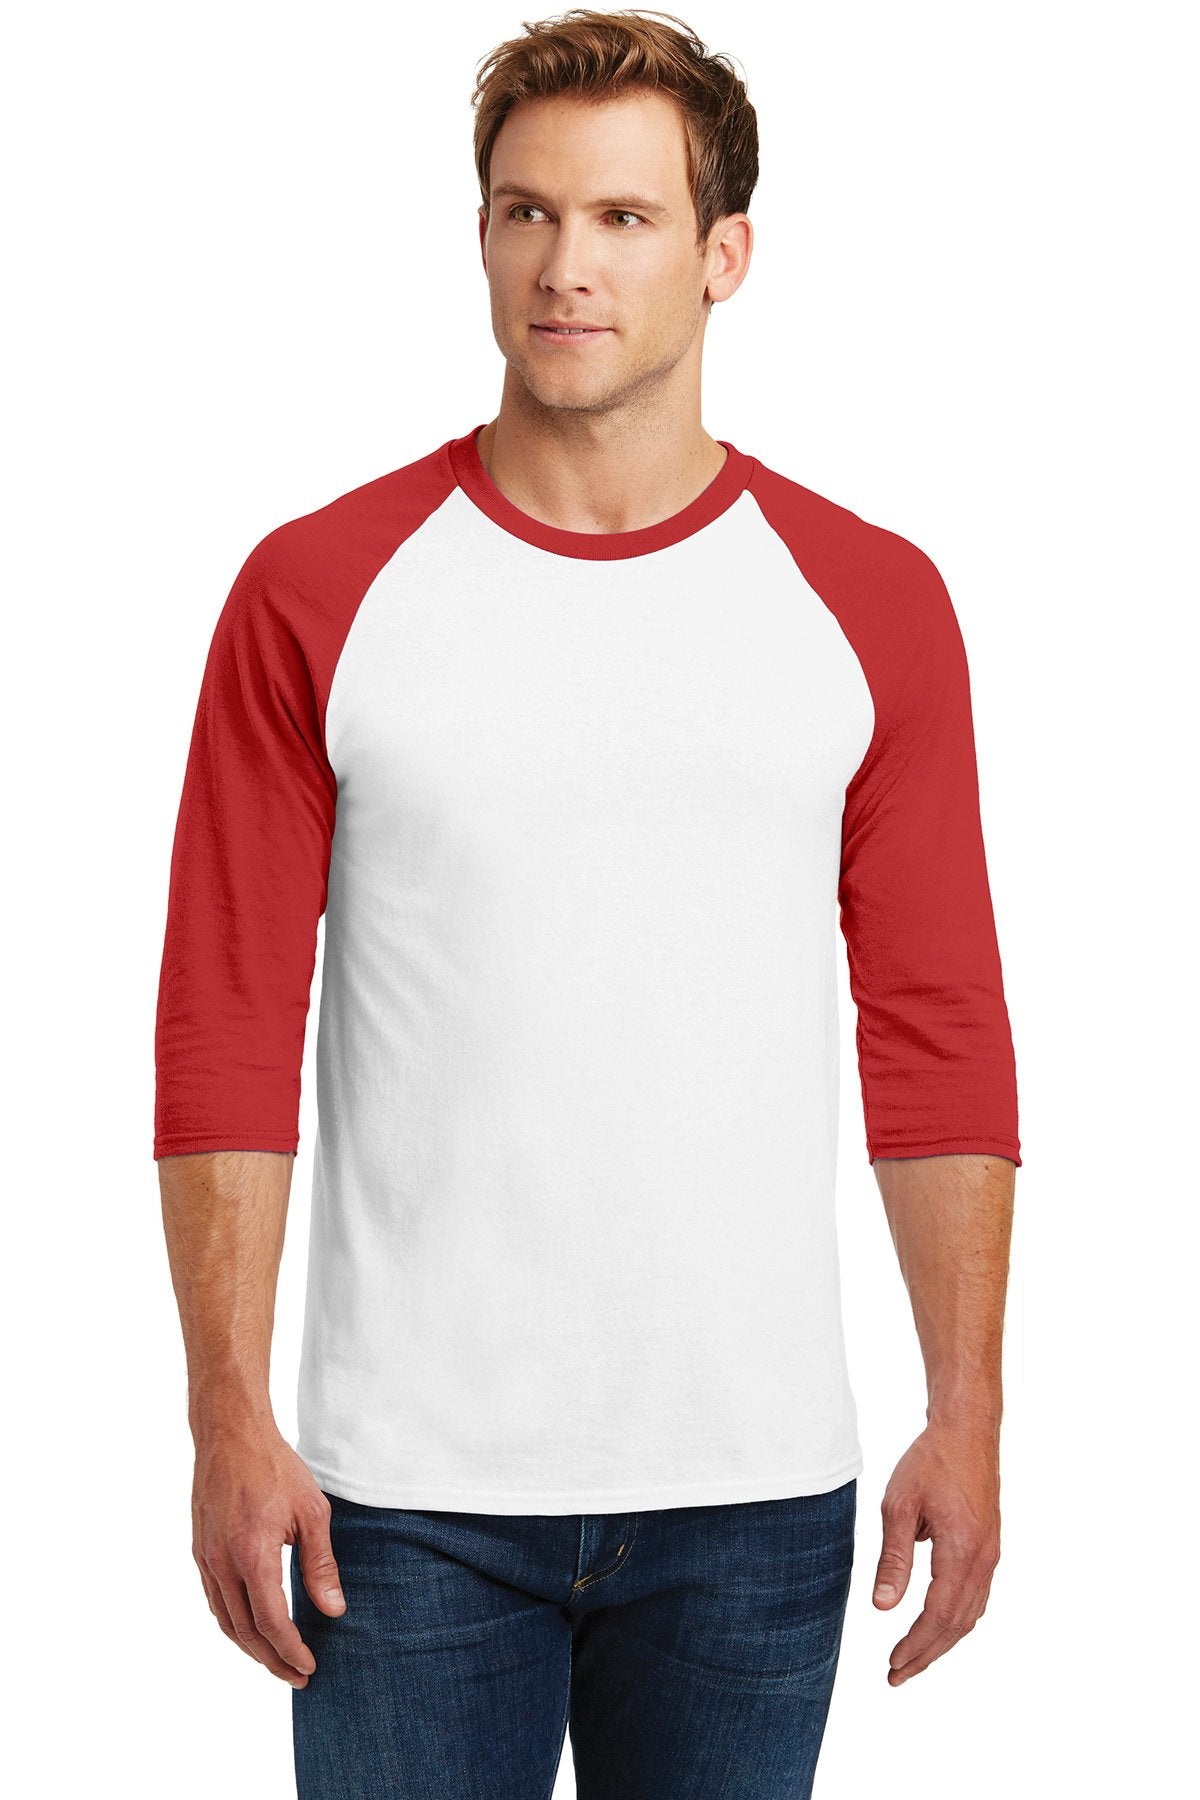 gildan heavy cotton 3 4 sleeve raglan t shirt 5700 white/ red